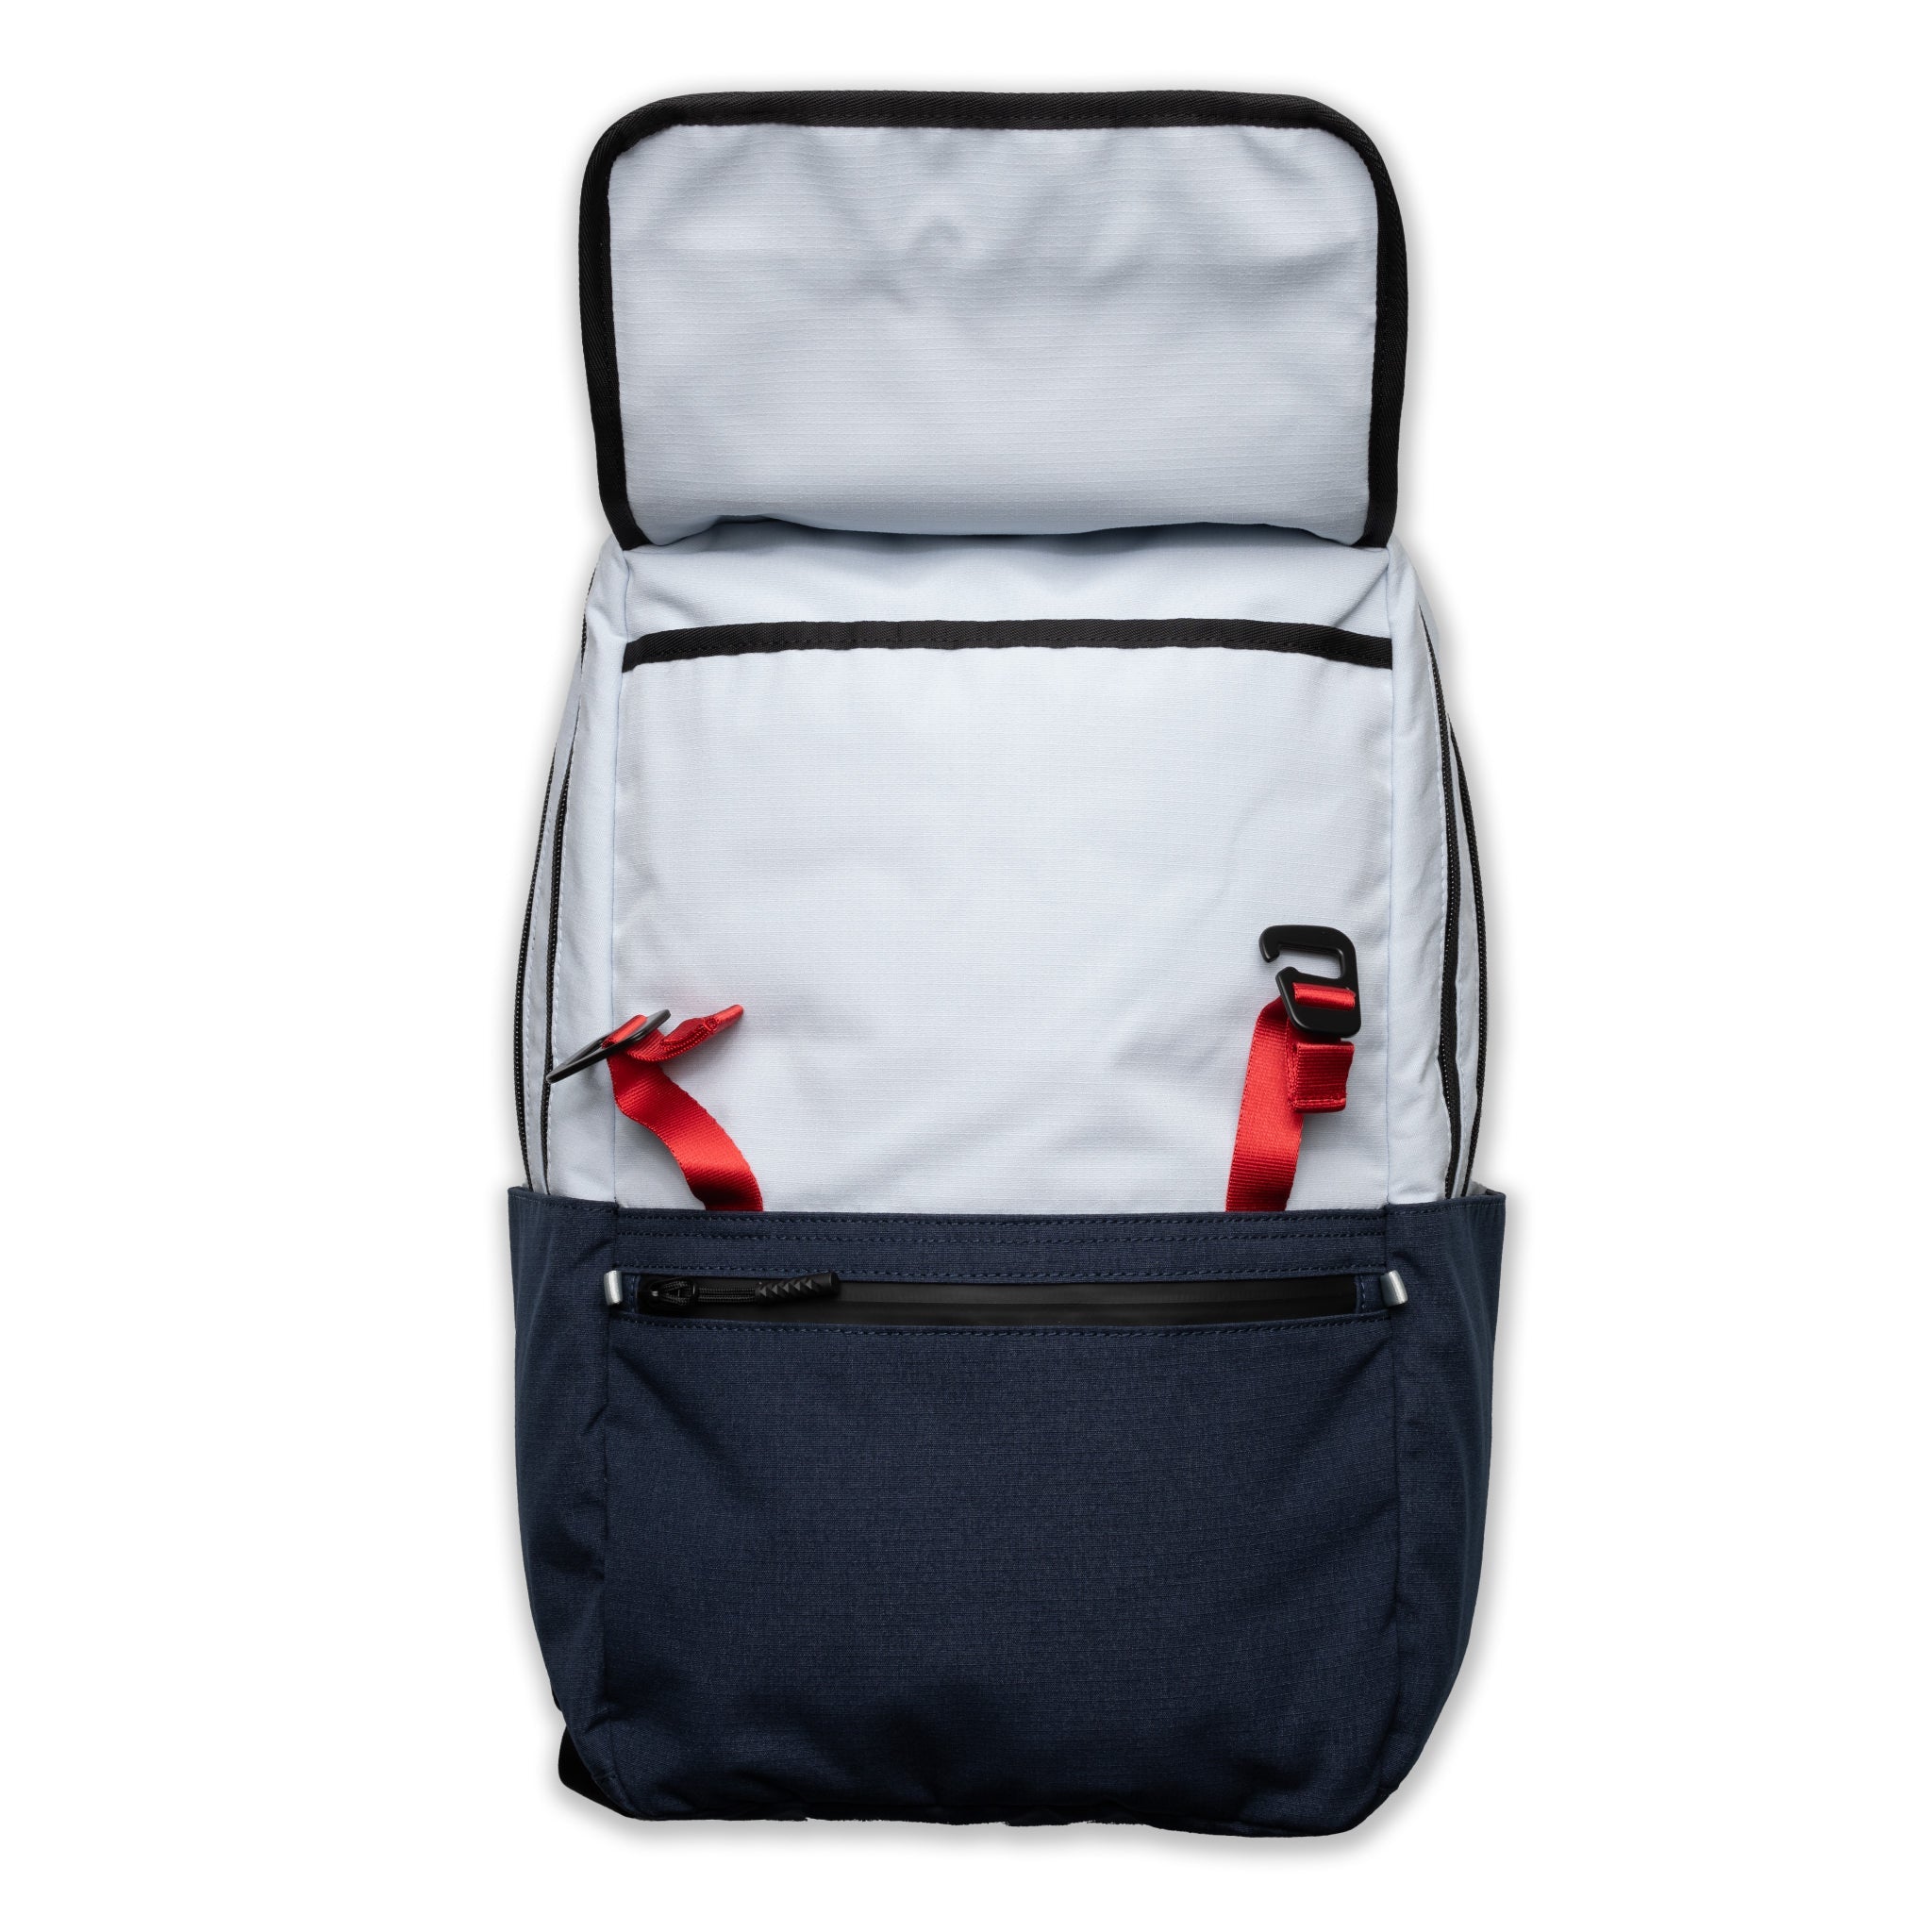 Jones Sports Co. A2 Backpack - Soft Blue/Navy